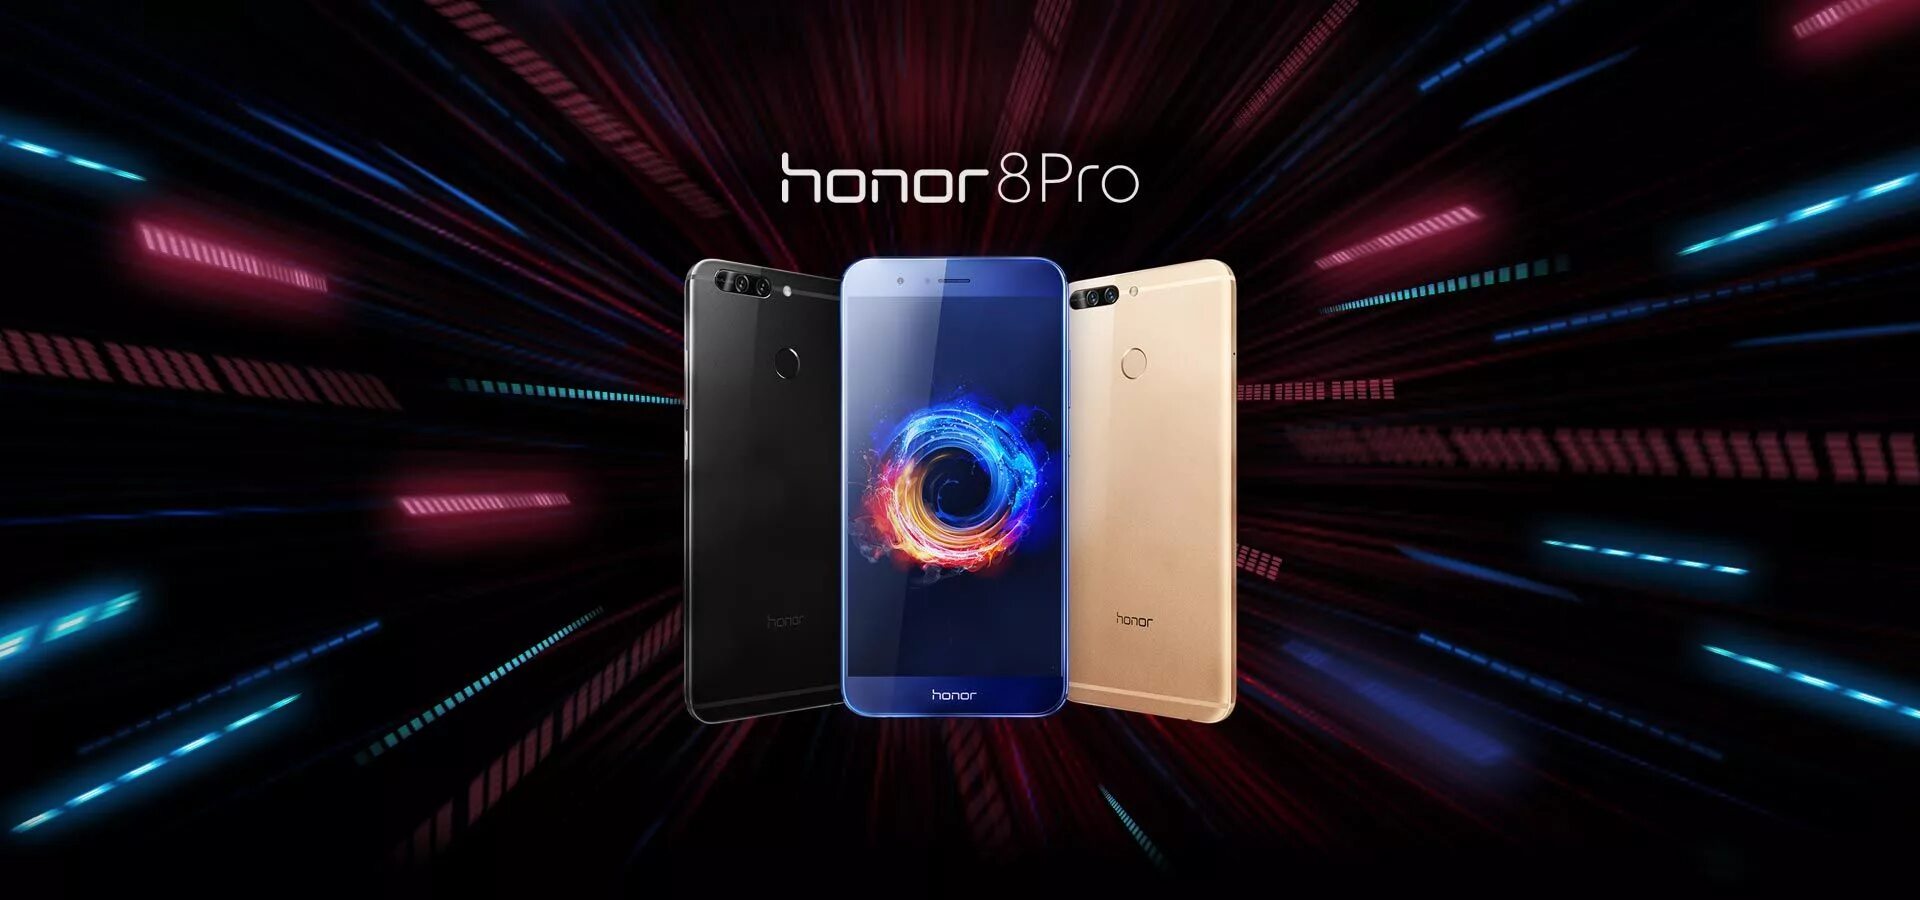 Huawei Honor 8 Pro. Huawei 8 Pro. Хонор 8а. Хонор 8а фото. Honor c pro